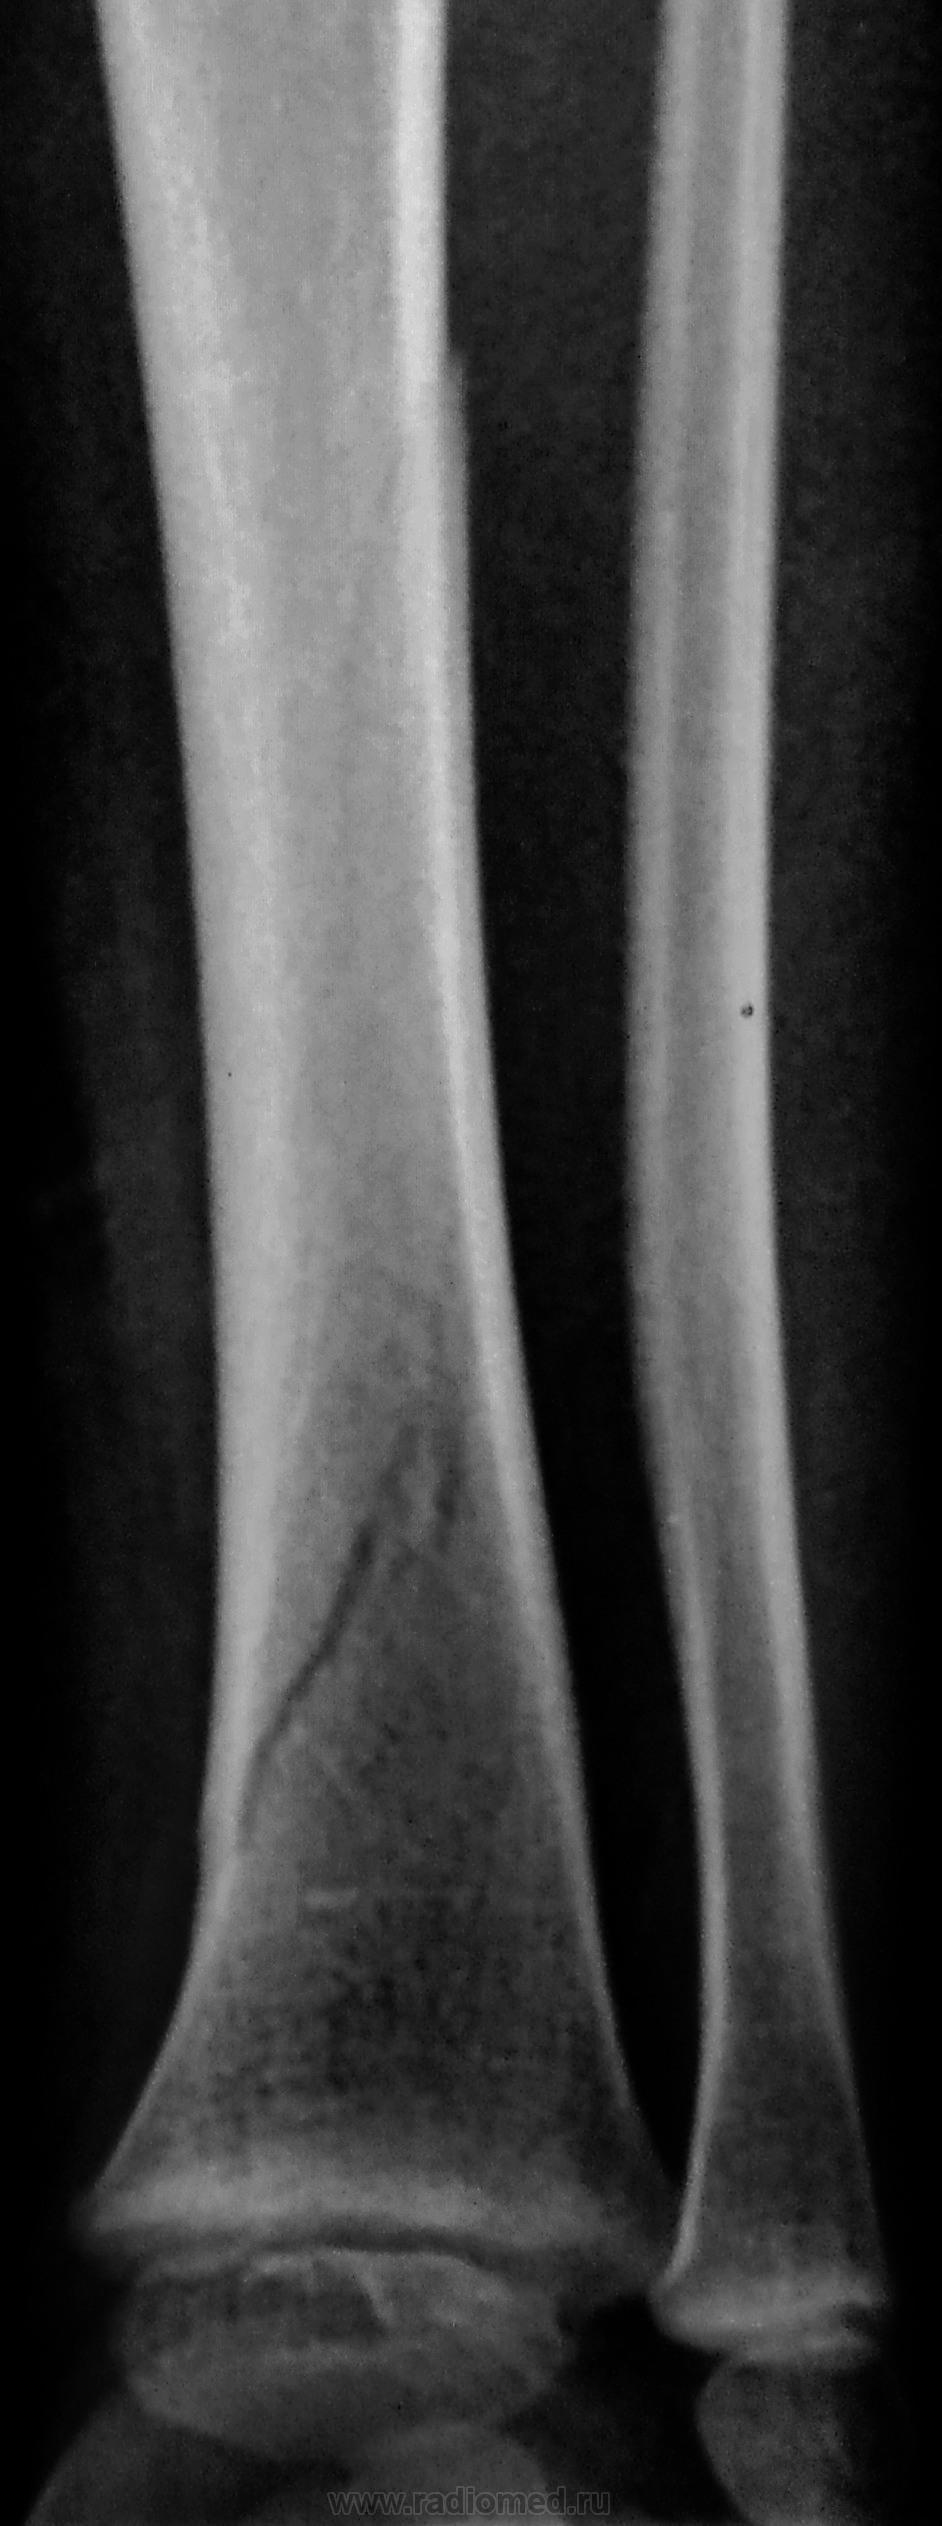 Рентген большеберцовой кости